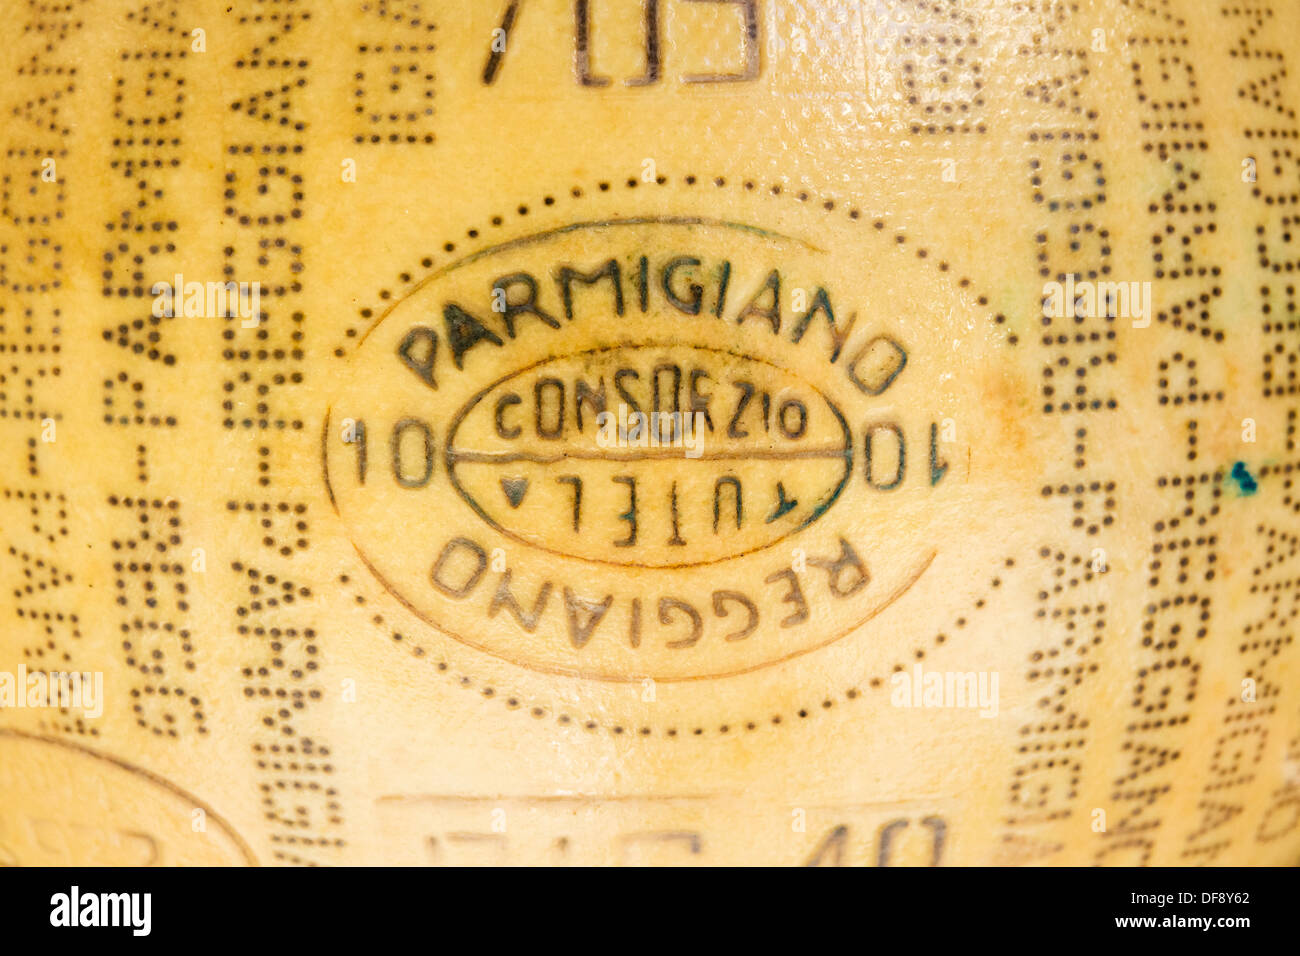 Close up de l'estampillage sur une roue de fromage Parmigiano Reggiano, Reggio Emilia, Emilie Romagne, Italie Banque D'Images